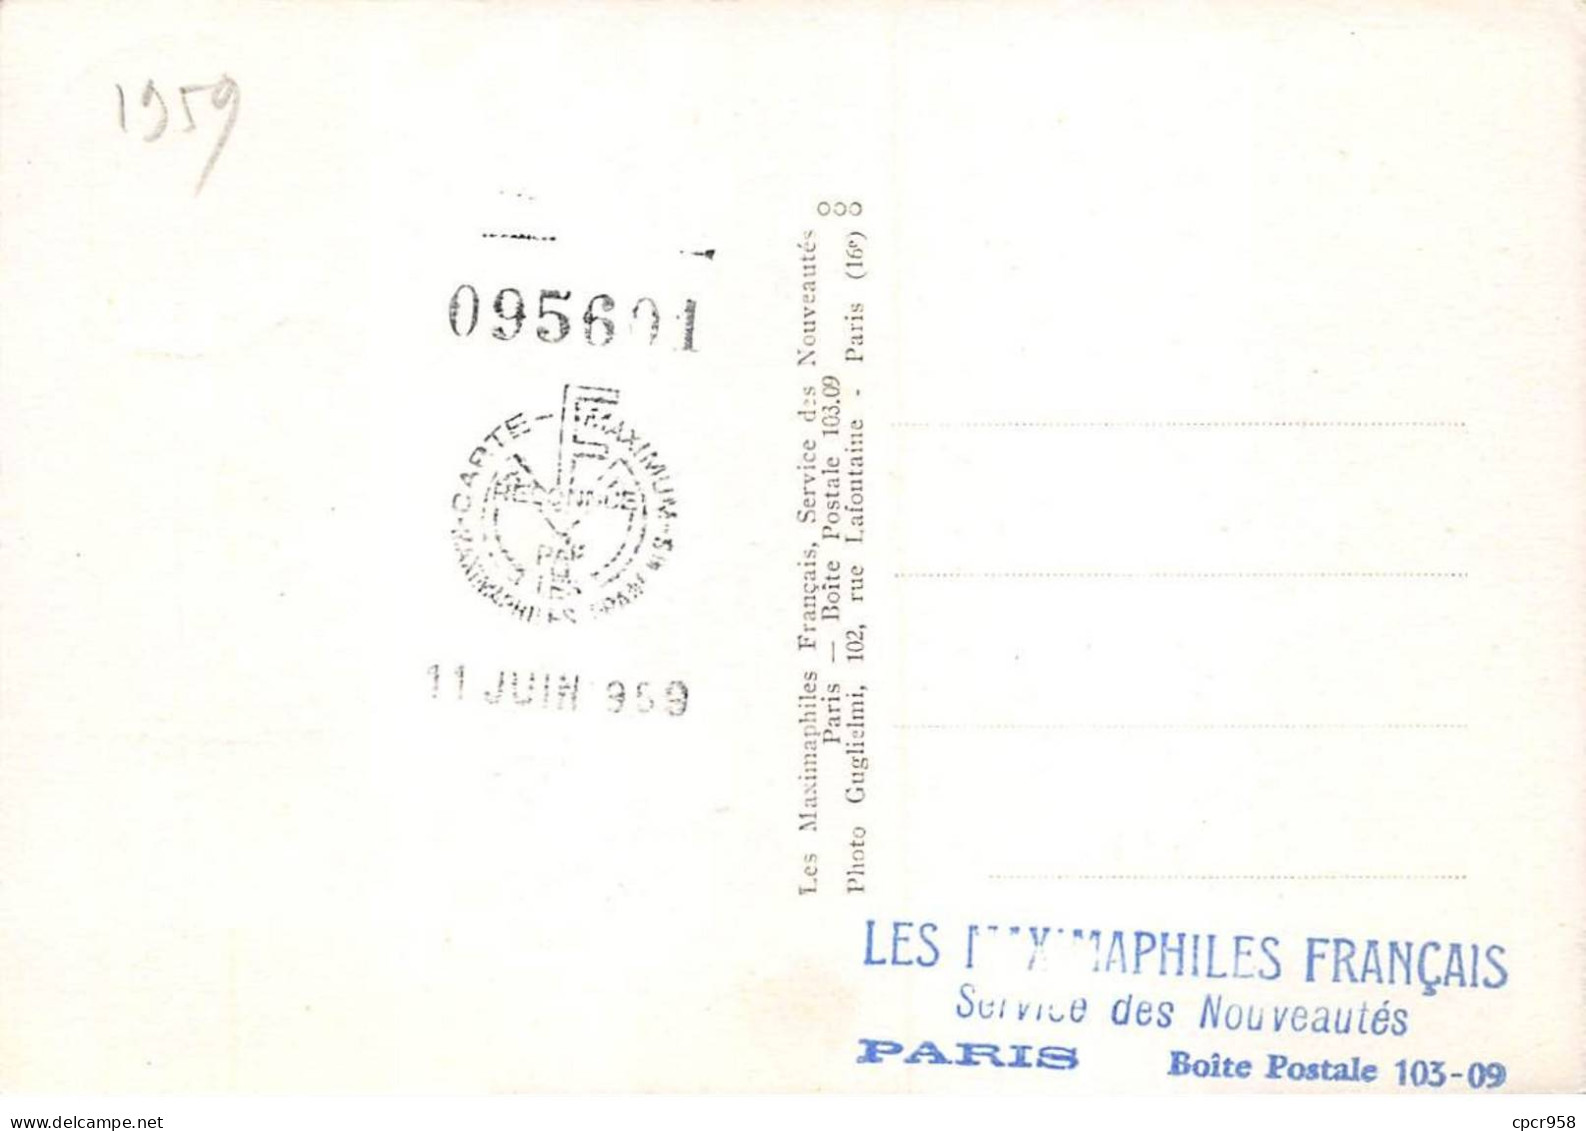 Carte Maximum - ALGERIE -  COR12732 - 23/05/1959 - Barrage De FOUM EL GHERZA -  Cachet Biskra - Sonstige - Afrika